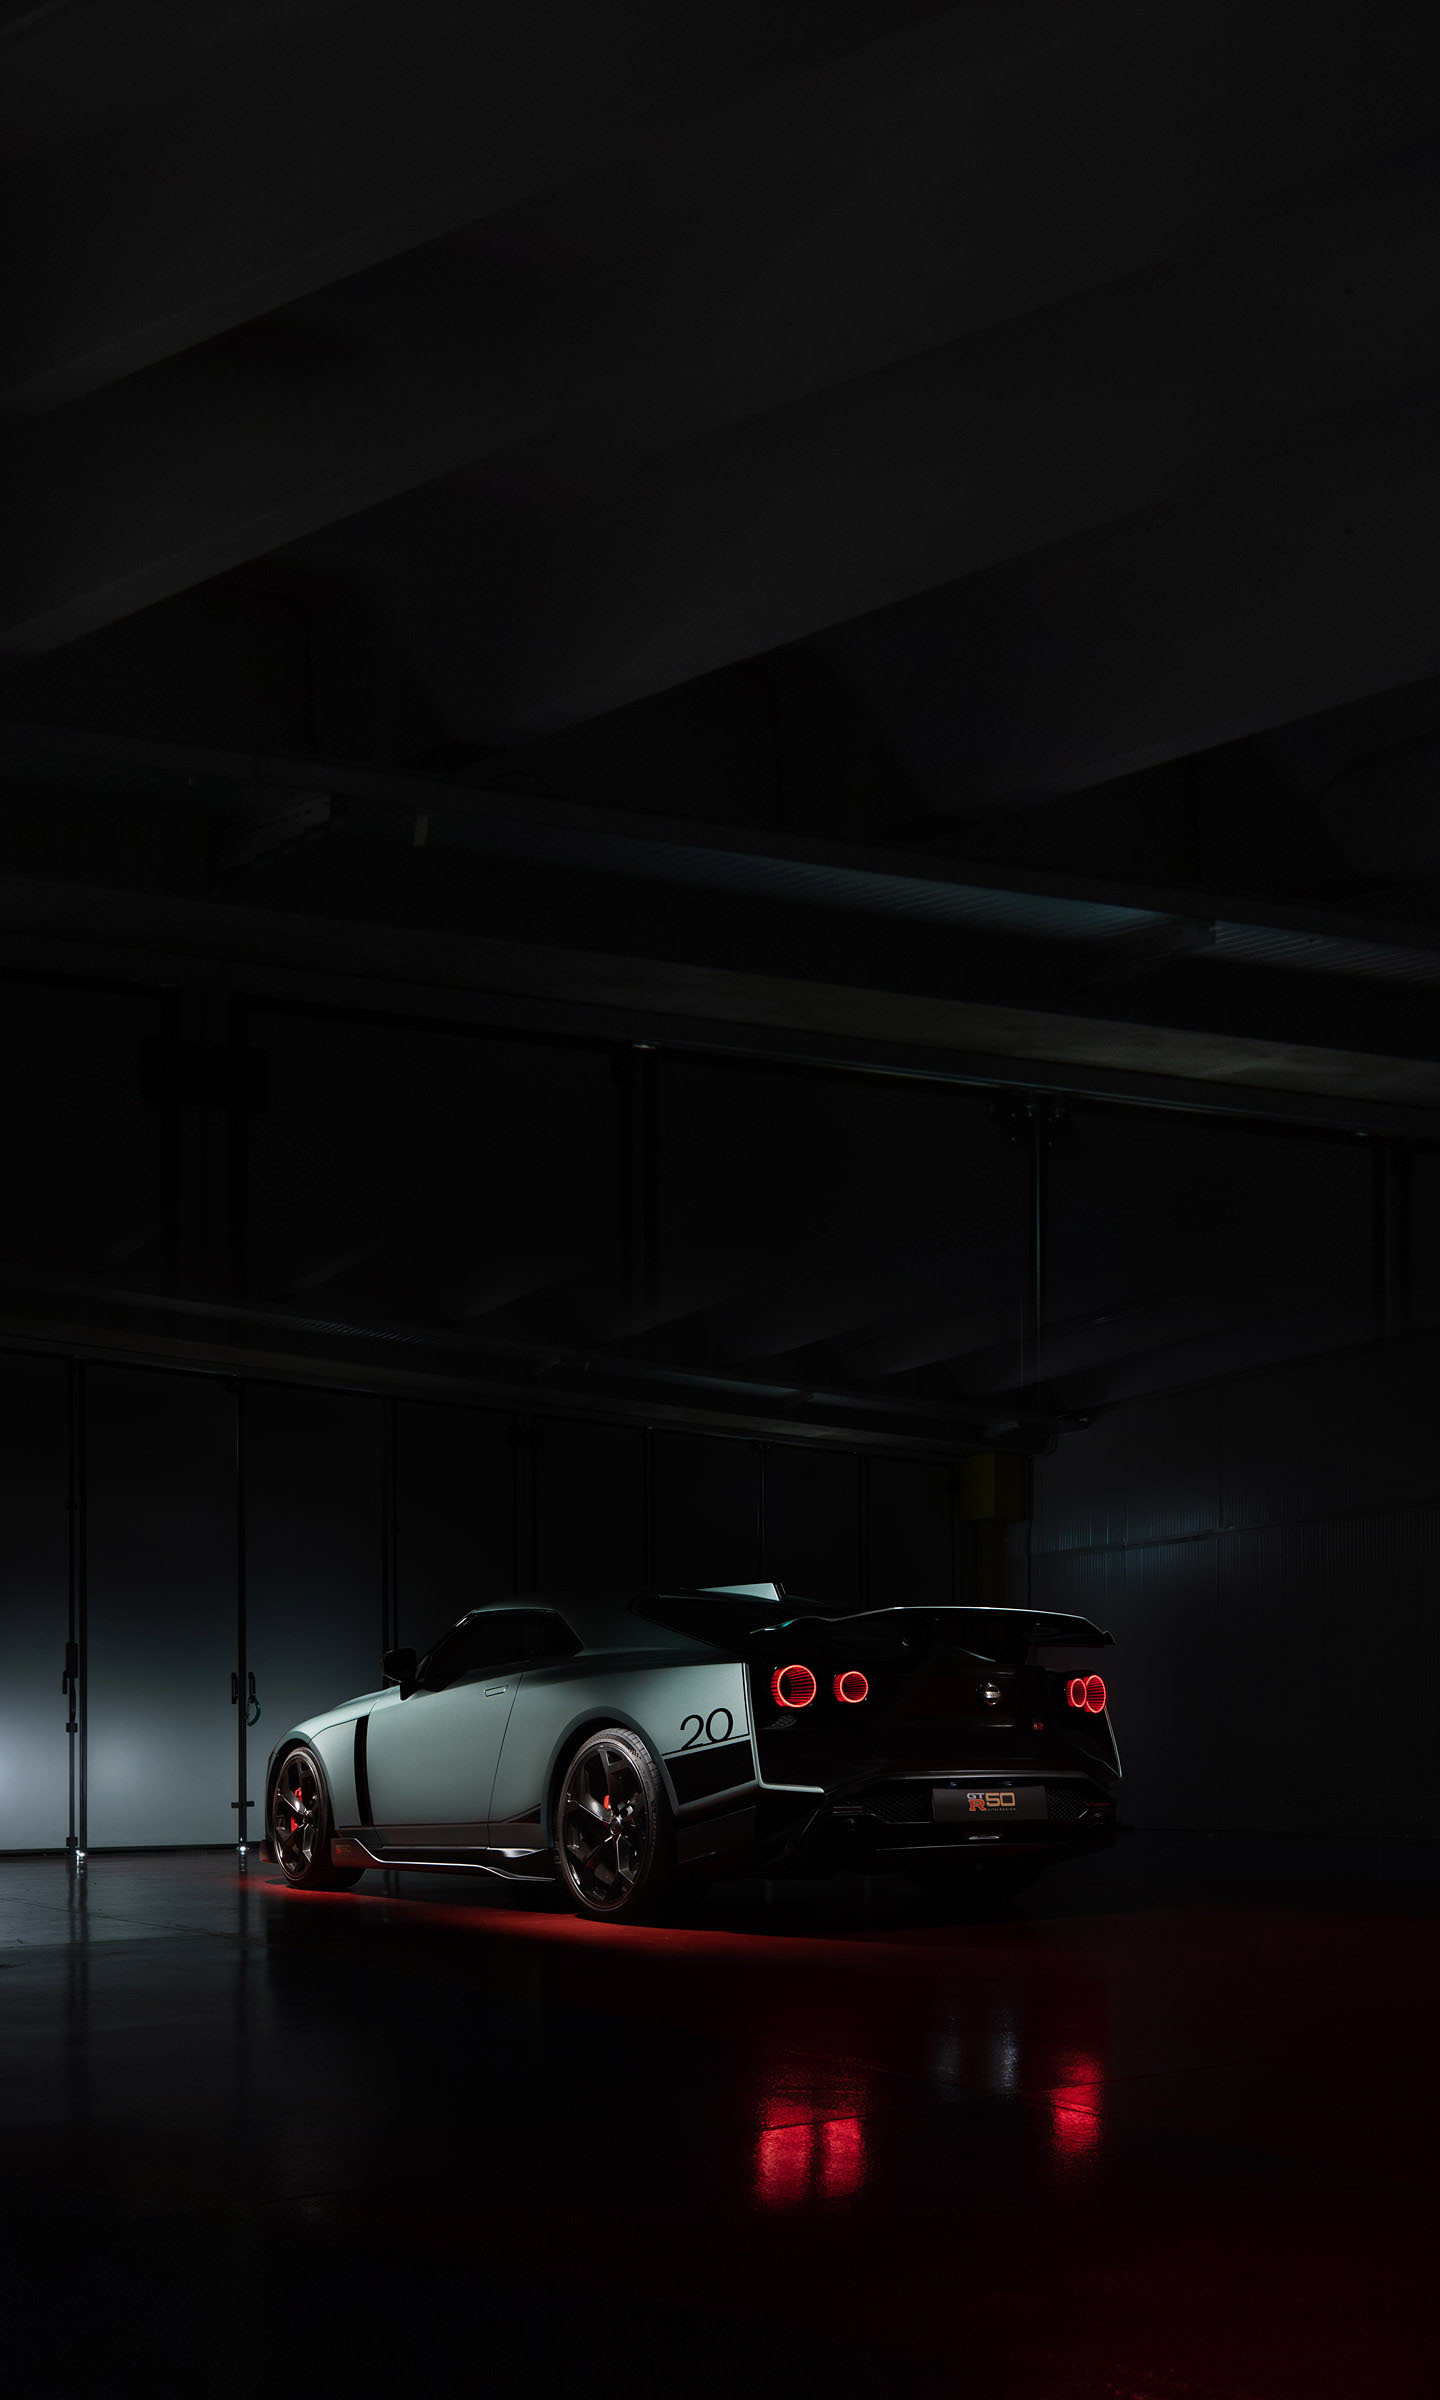  2021 Nissan GT-R50 by Italdesign Wallpaper.